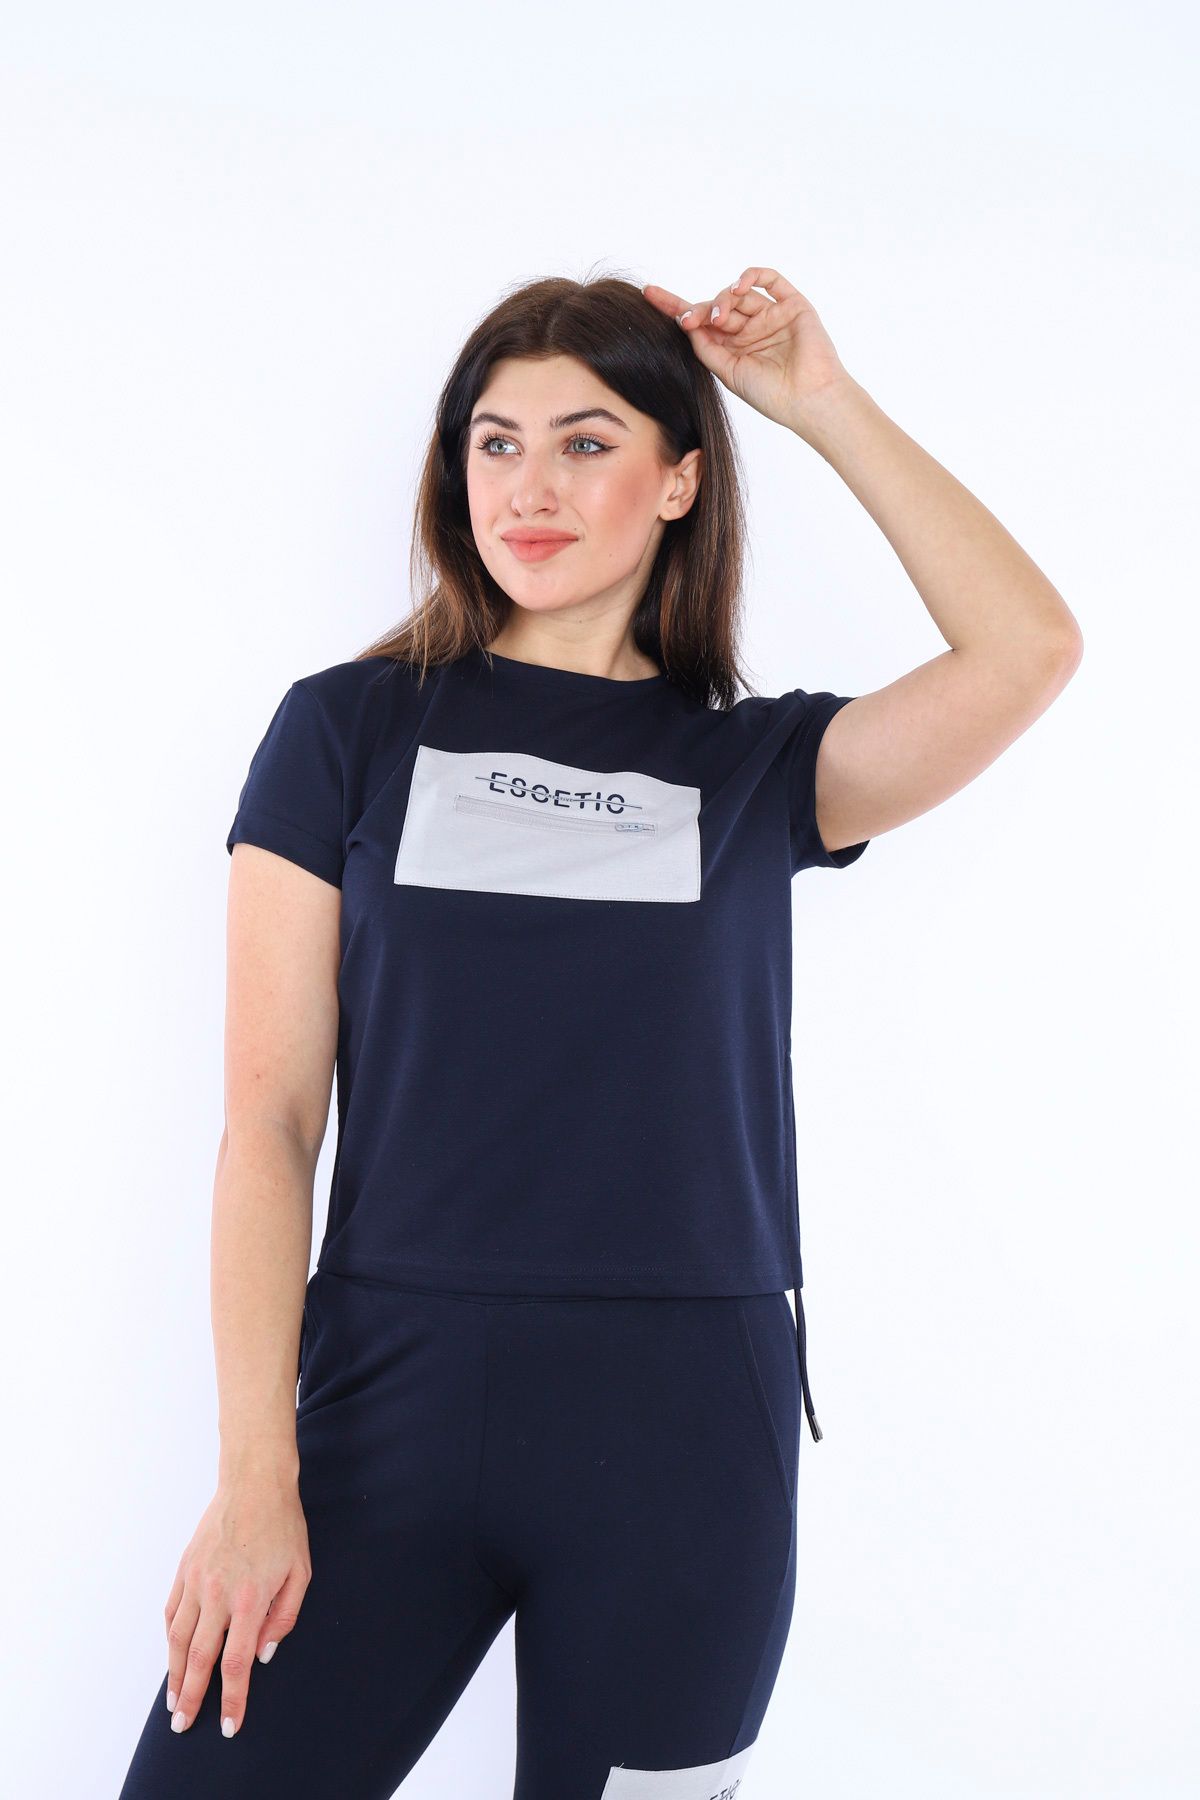 Escetic Lacivert Kadın Dokuma Detaylı Abd Pike Nefes Alan T-shirt Takım A3004